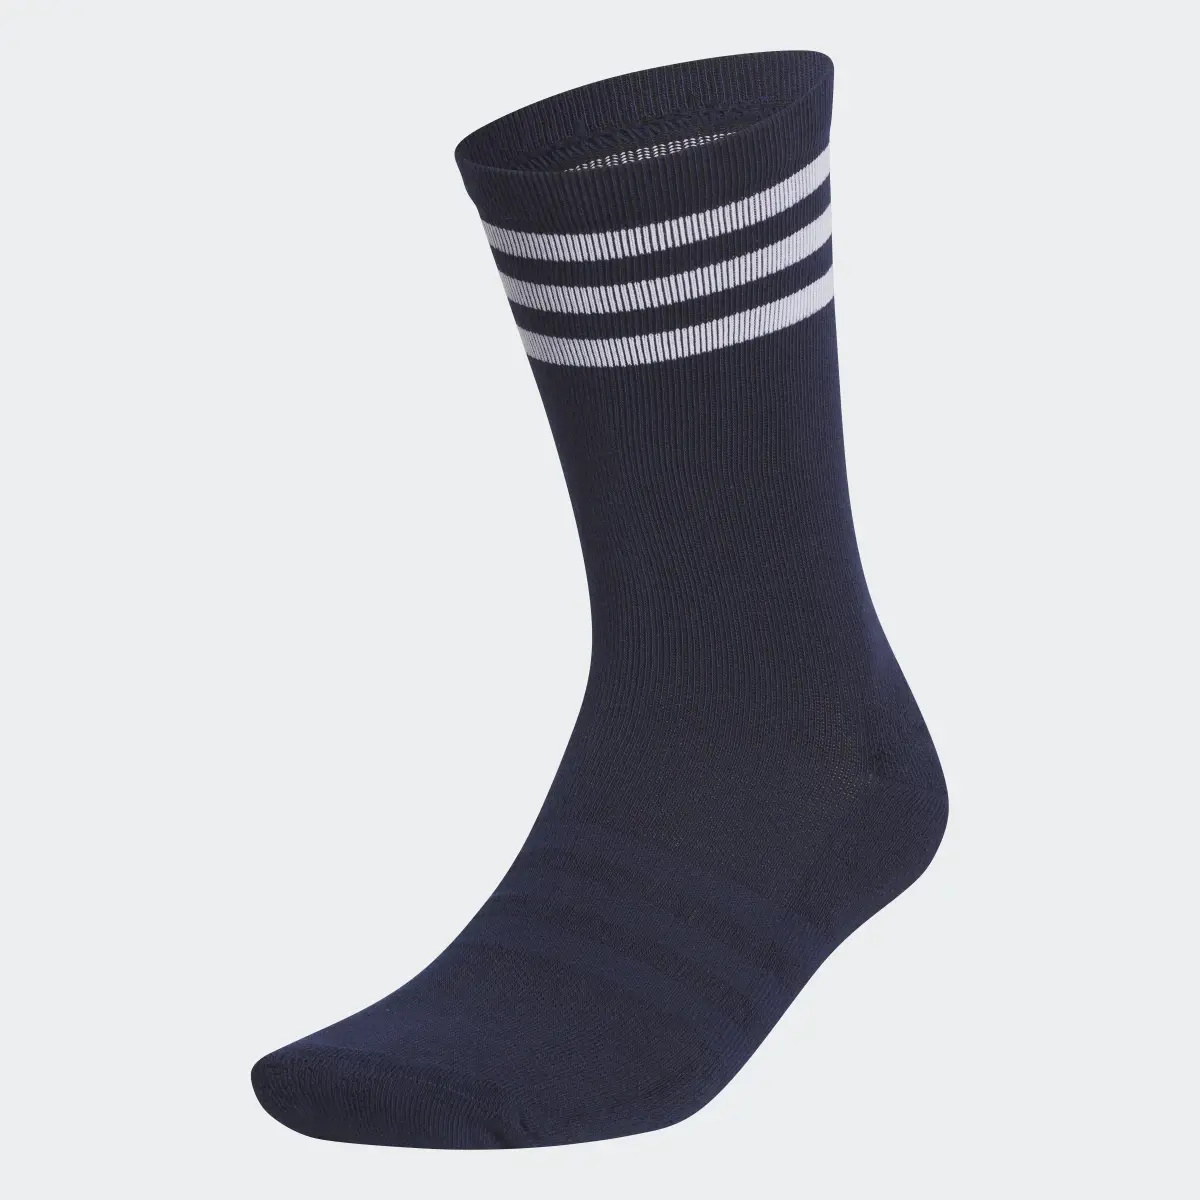 Adidas Basic Crew Golf Socks. 2